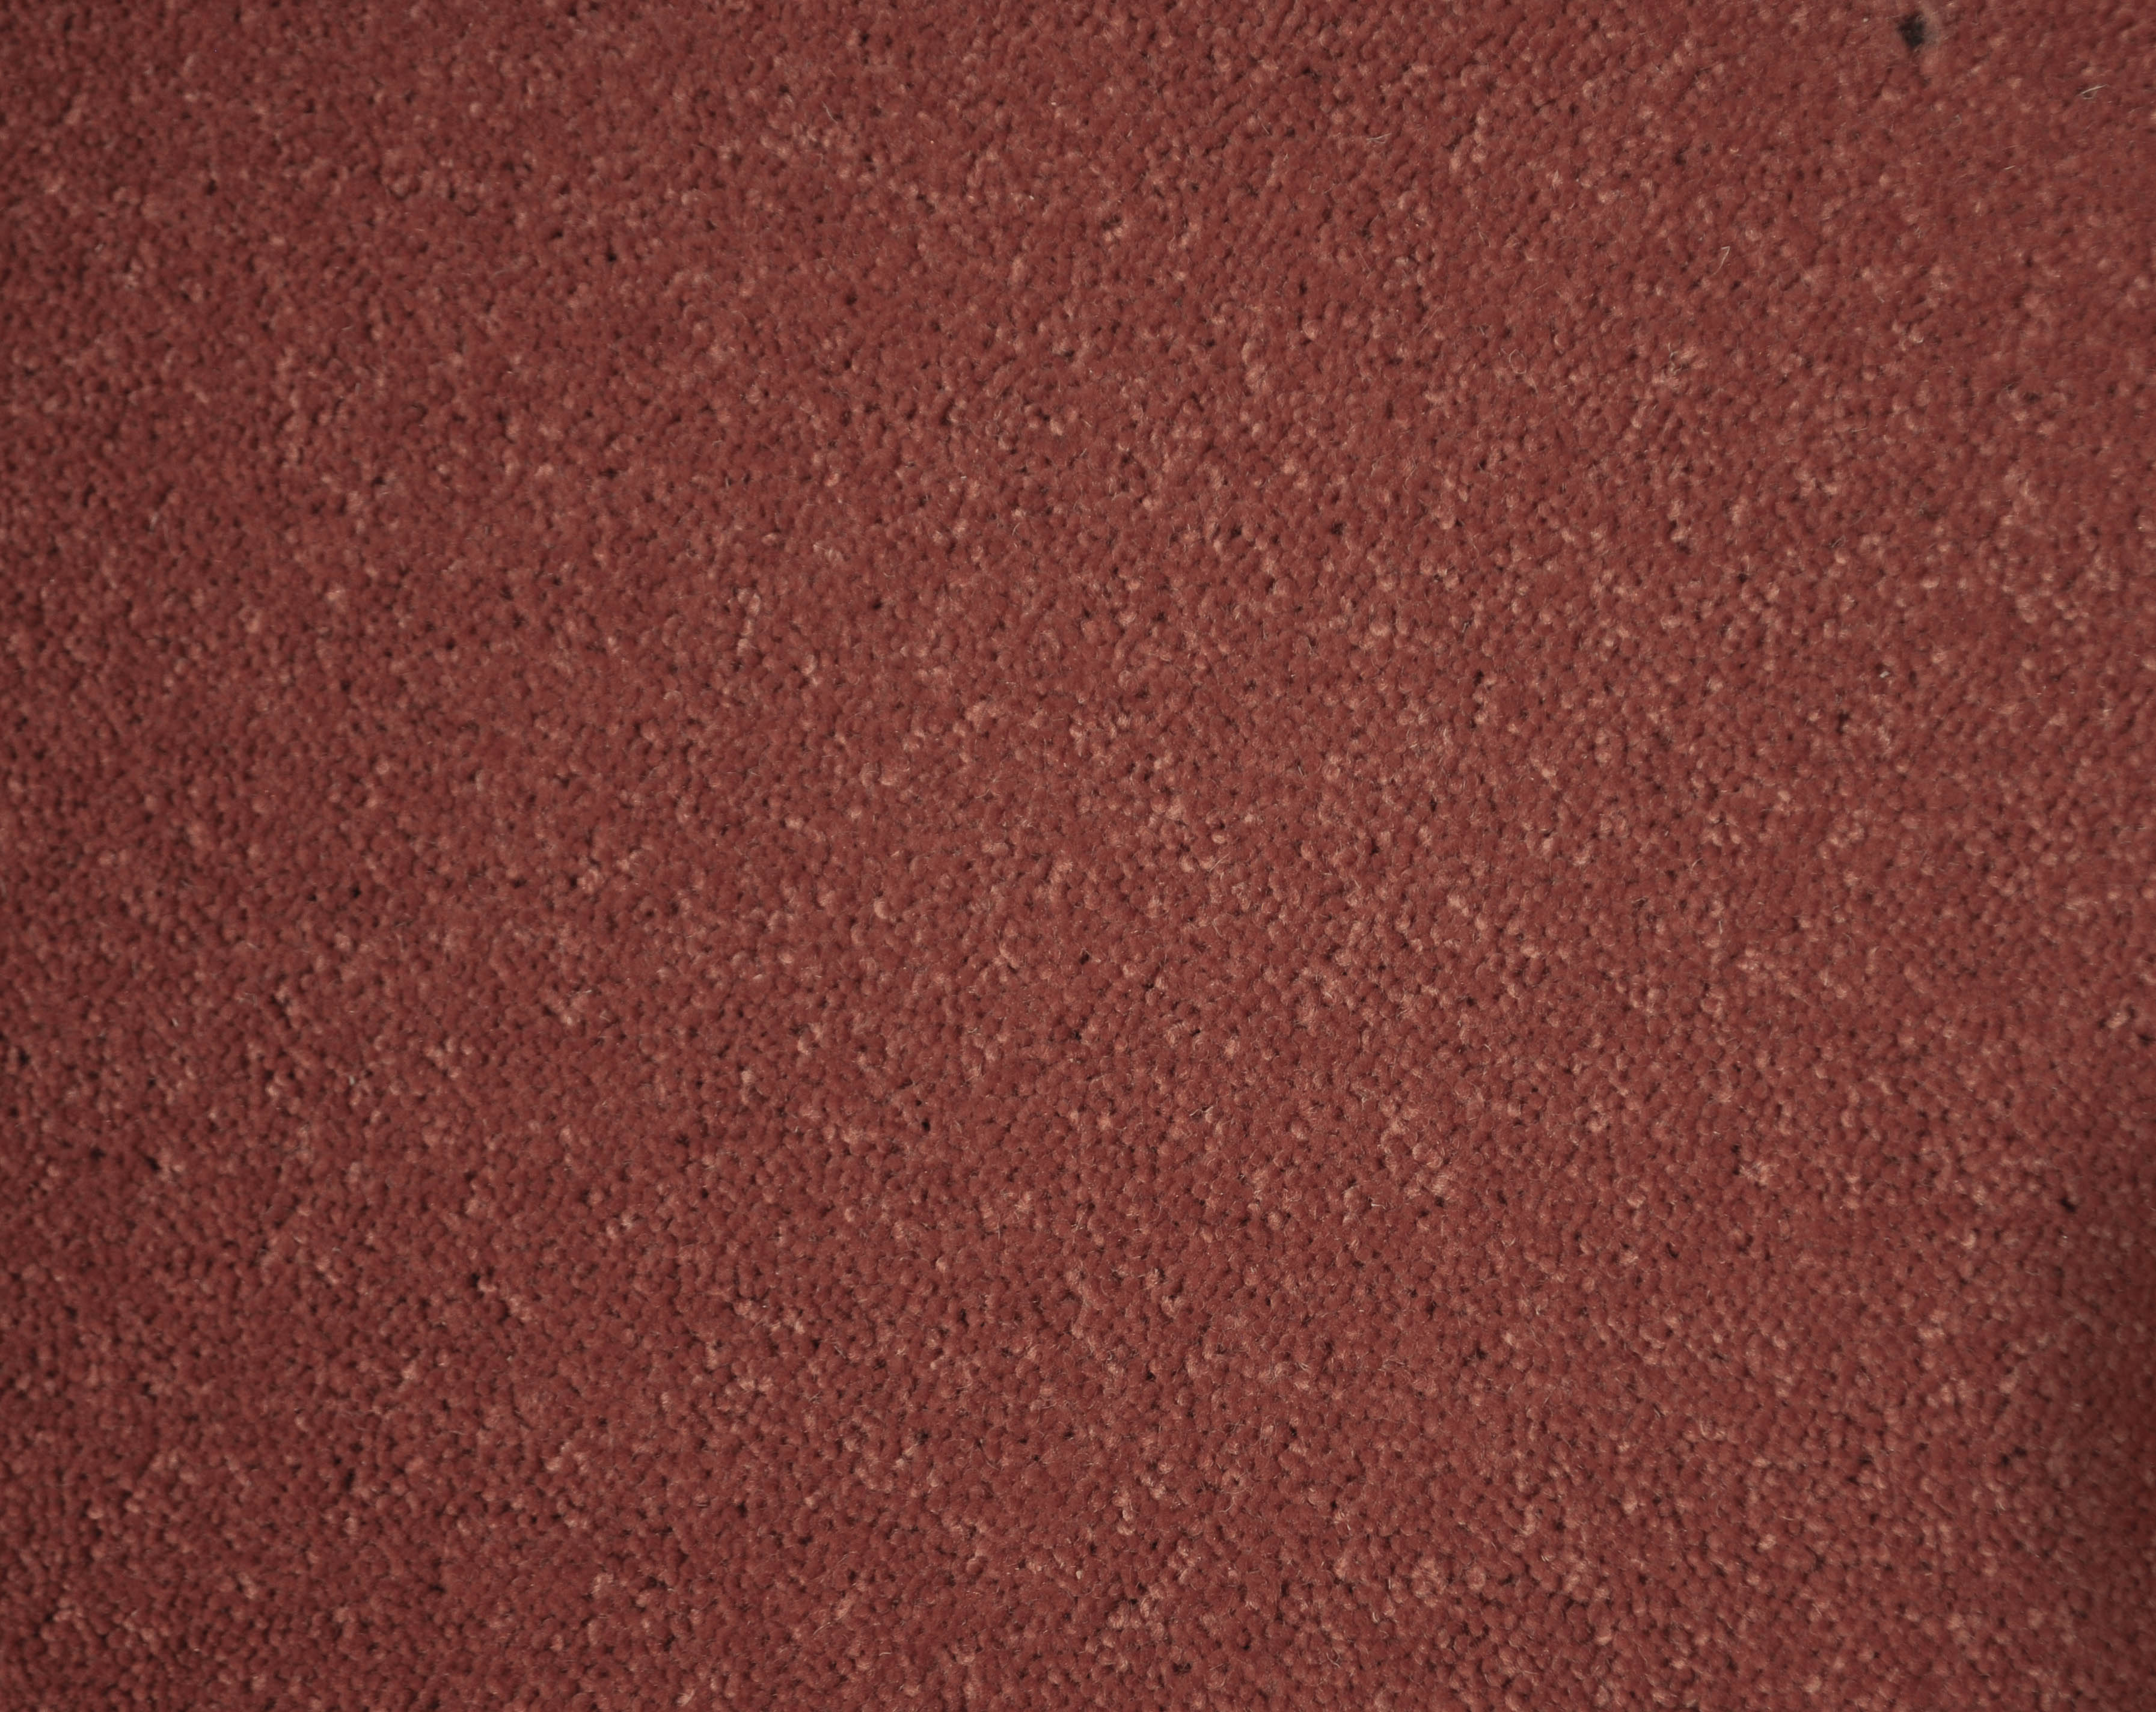 orangey terra-cotta colored, 100% wool fibre, twist pile carpet called mountain peaks on sale at Concord Floors.